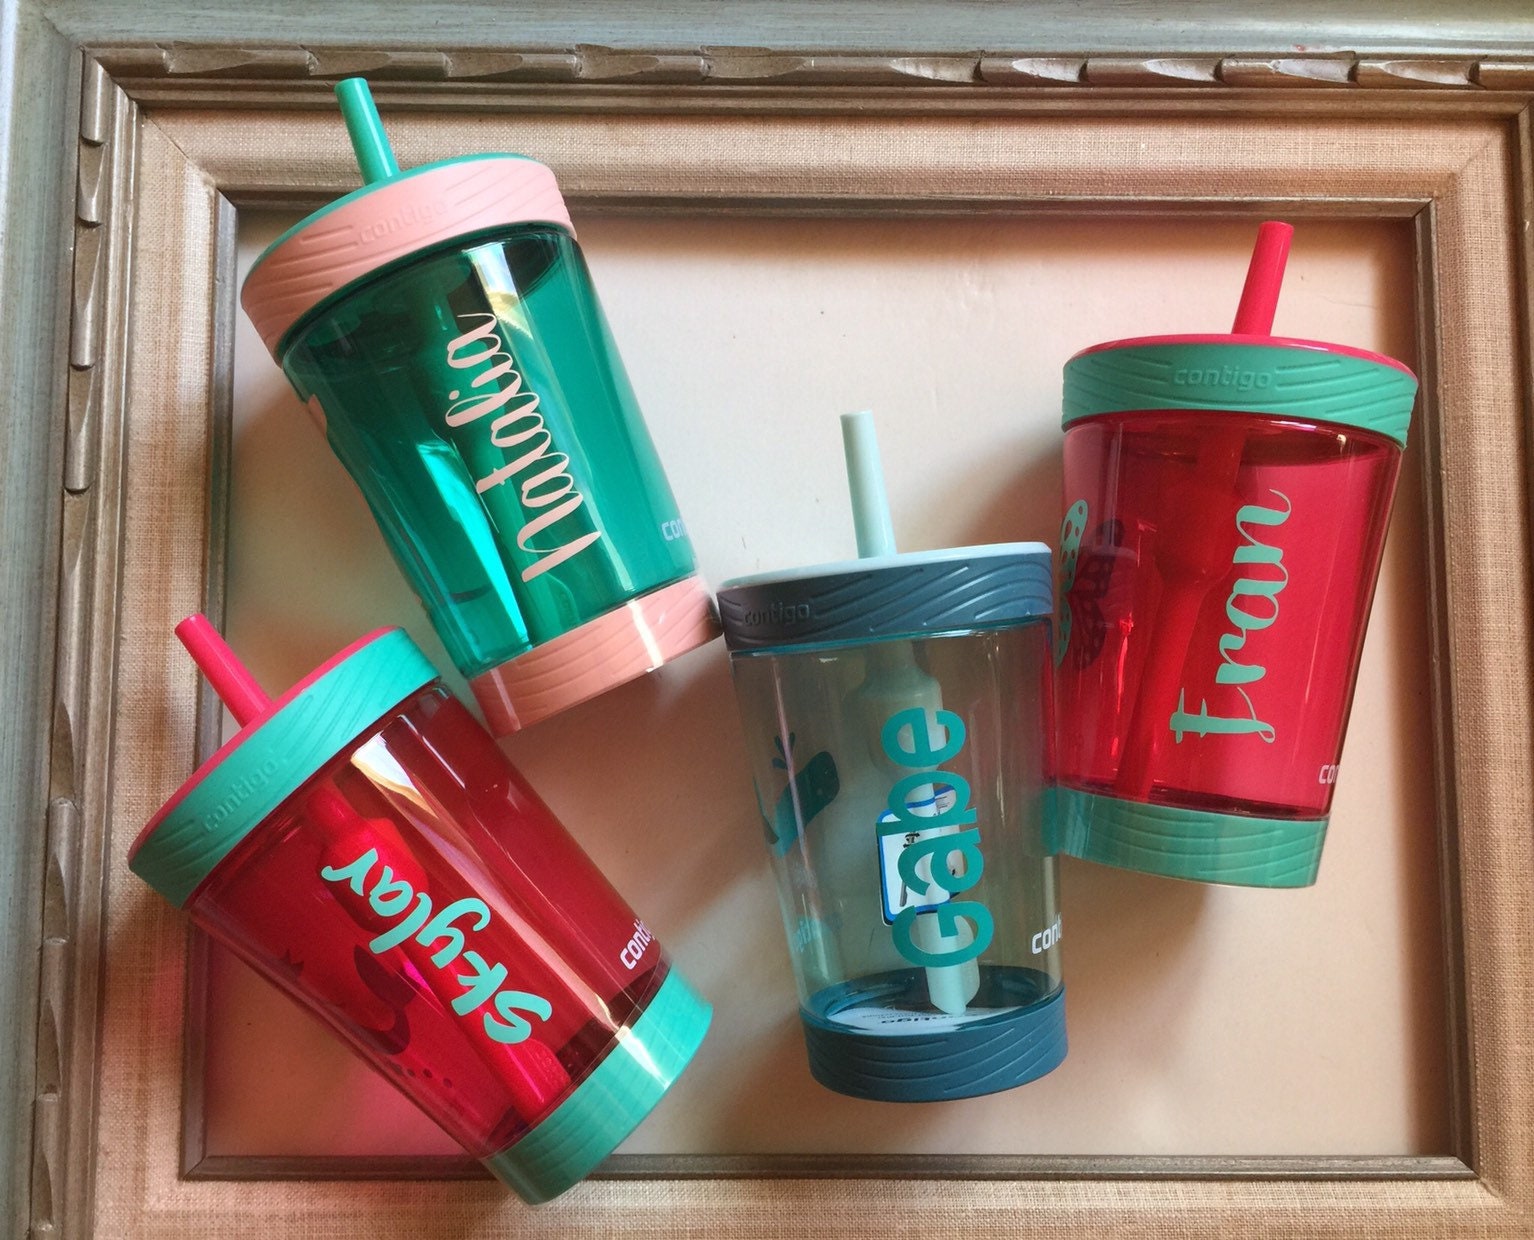 Kids Personalized Tumblers, Contigo Cup Bottle Straws, Kids